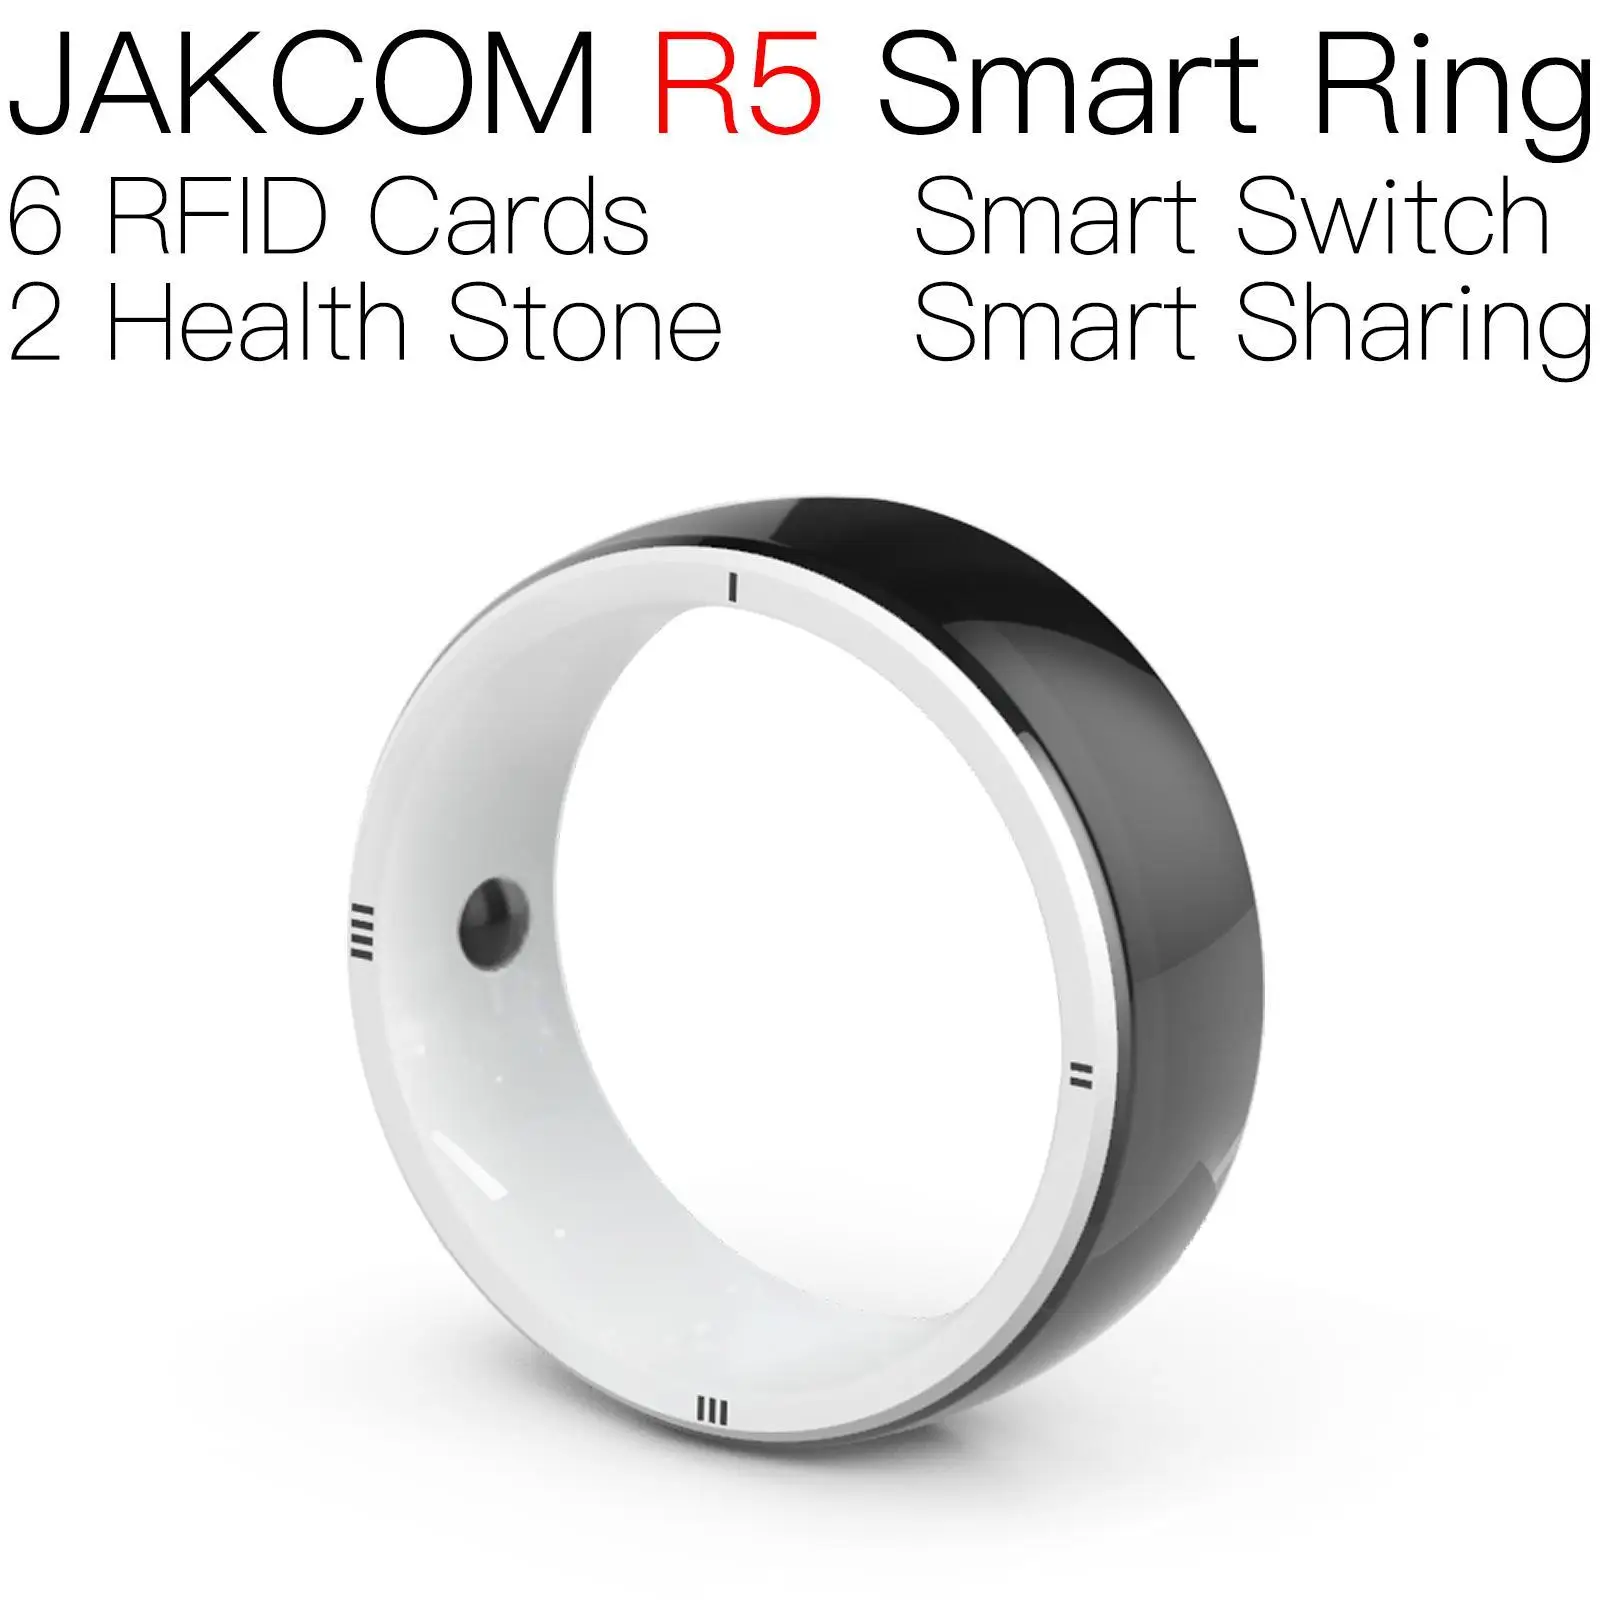 

JAKCOM R5 Smart Ring Super value than english rfid copier duplicator grandeur android em4100 125 card access bob uid changeable